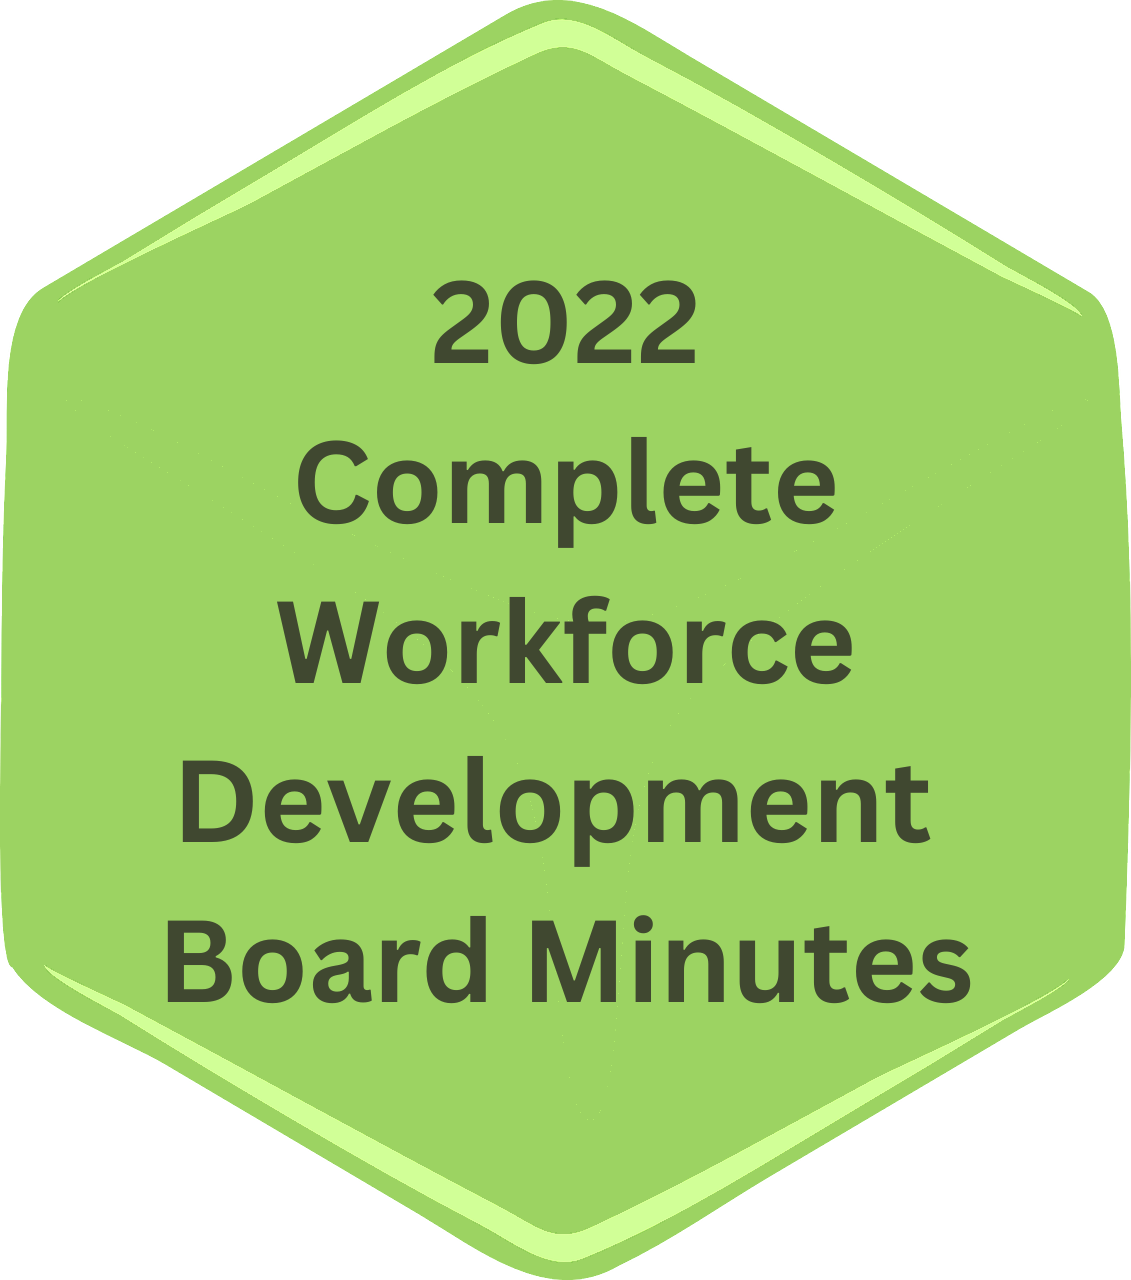 workforce development board meeting minutes complete 2022